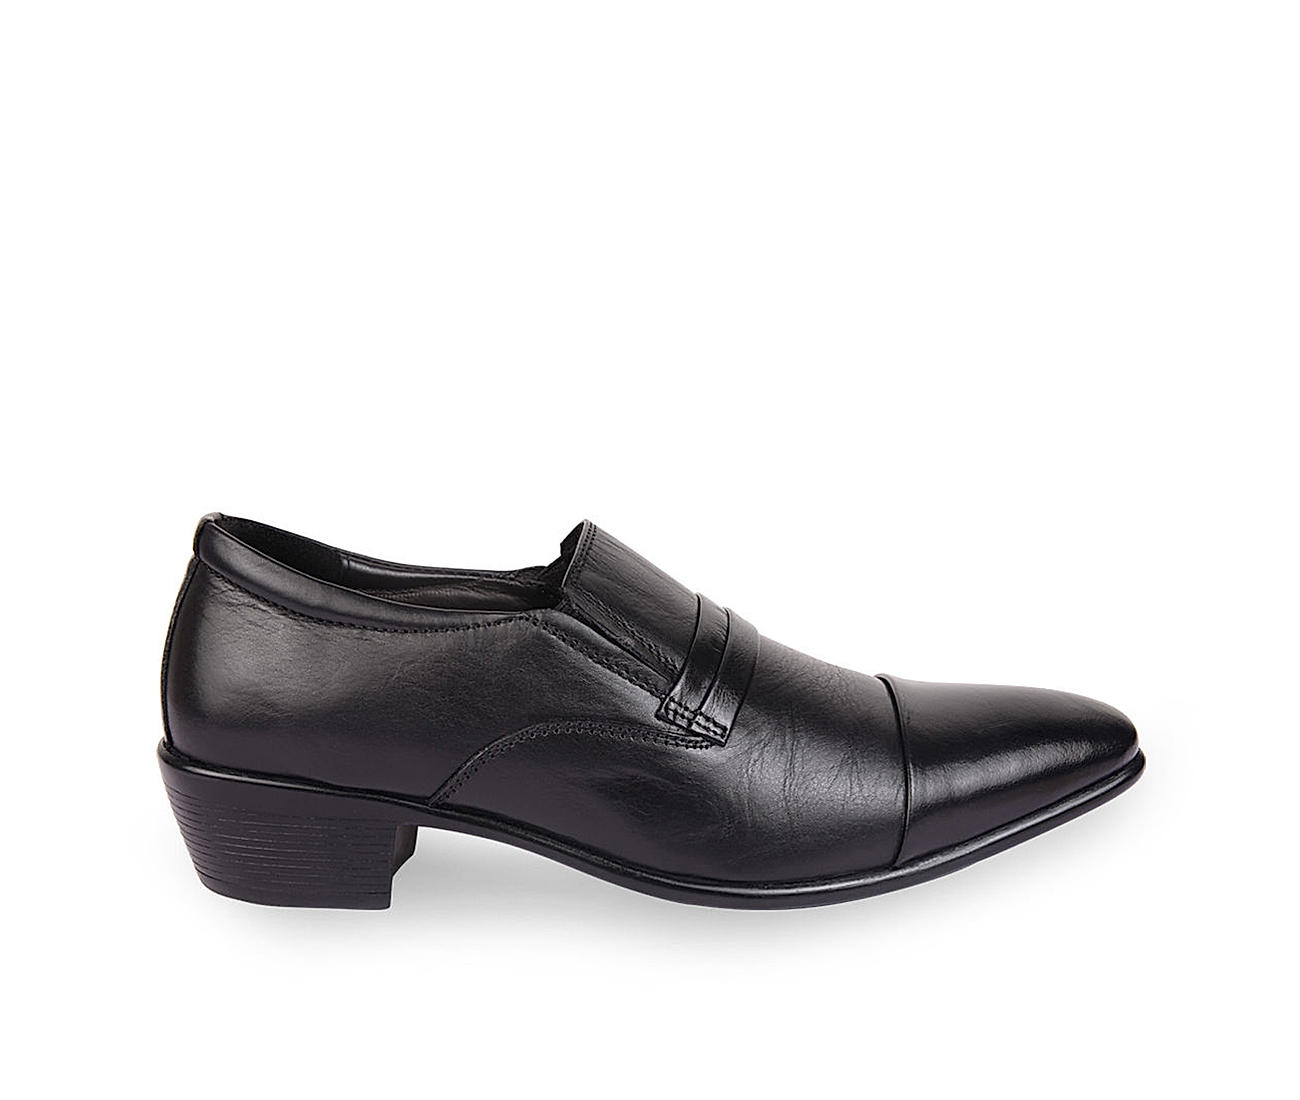 High Heels Men Shoes Black Genuine Leather-thanhphatduhoc.com.vn